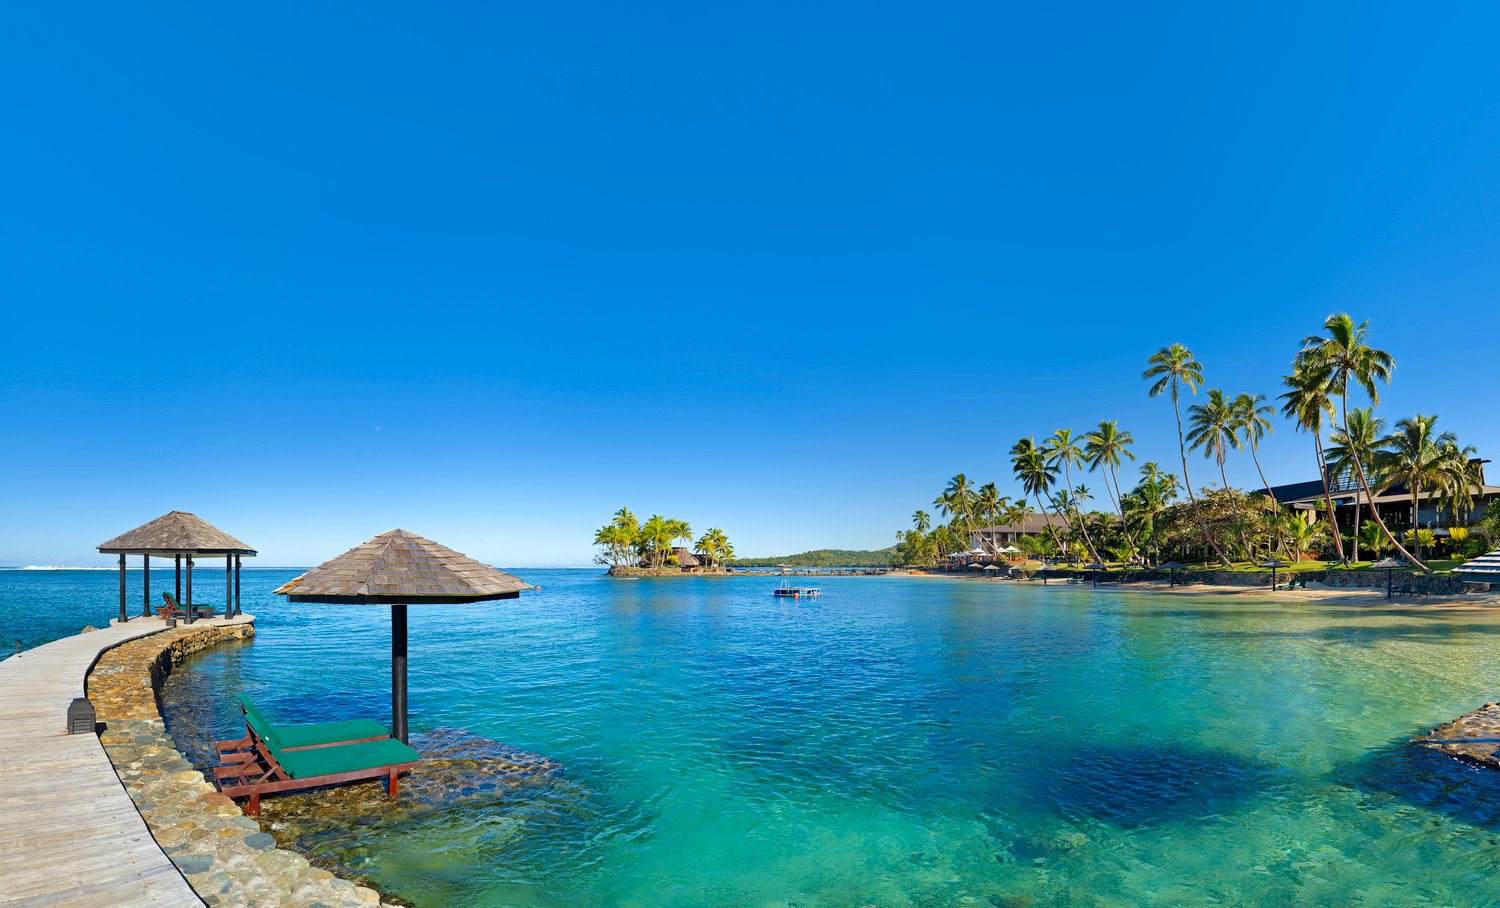 Coral Coast Fiji Islands